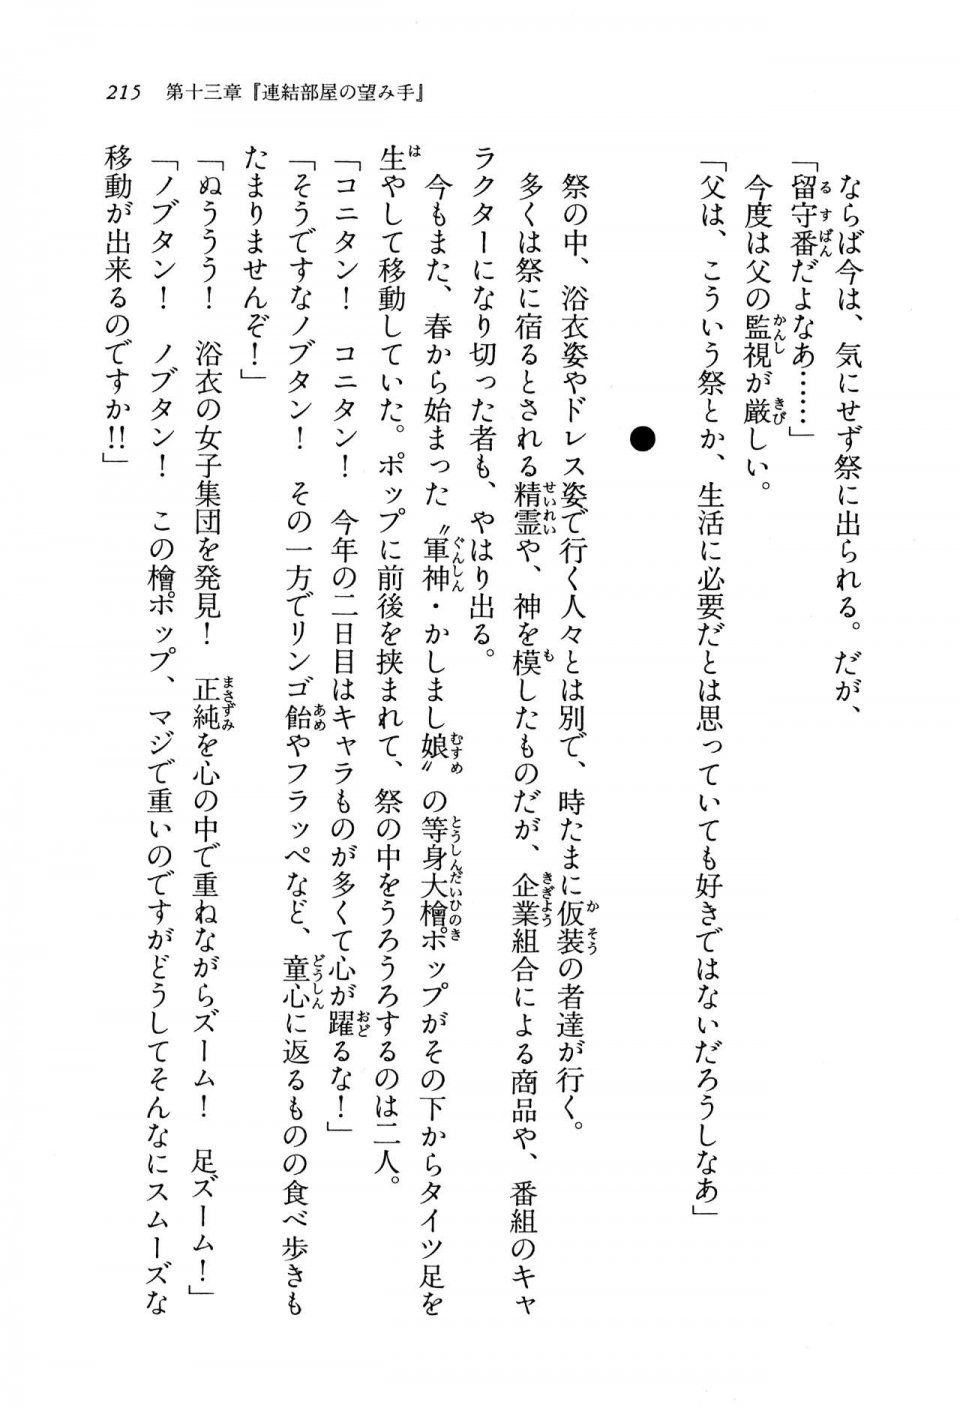 Kyoukai Senjou no Horizon BD Special Mininovel Vol 8(4B) - Photo #219